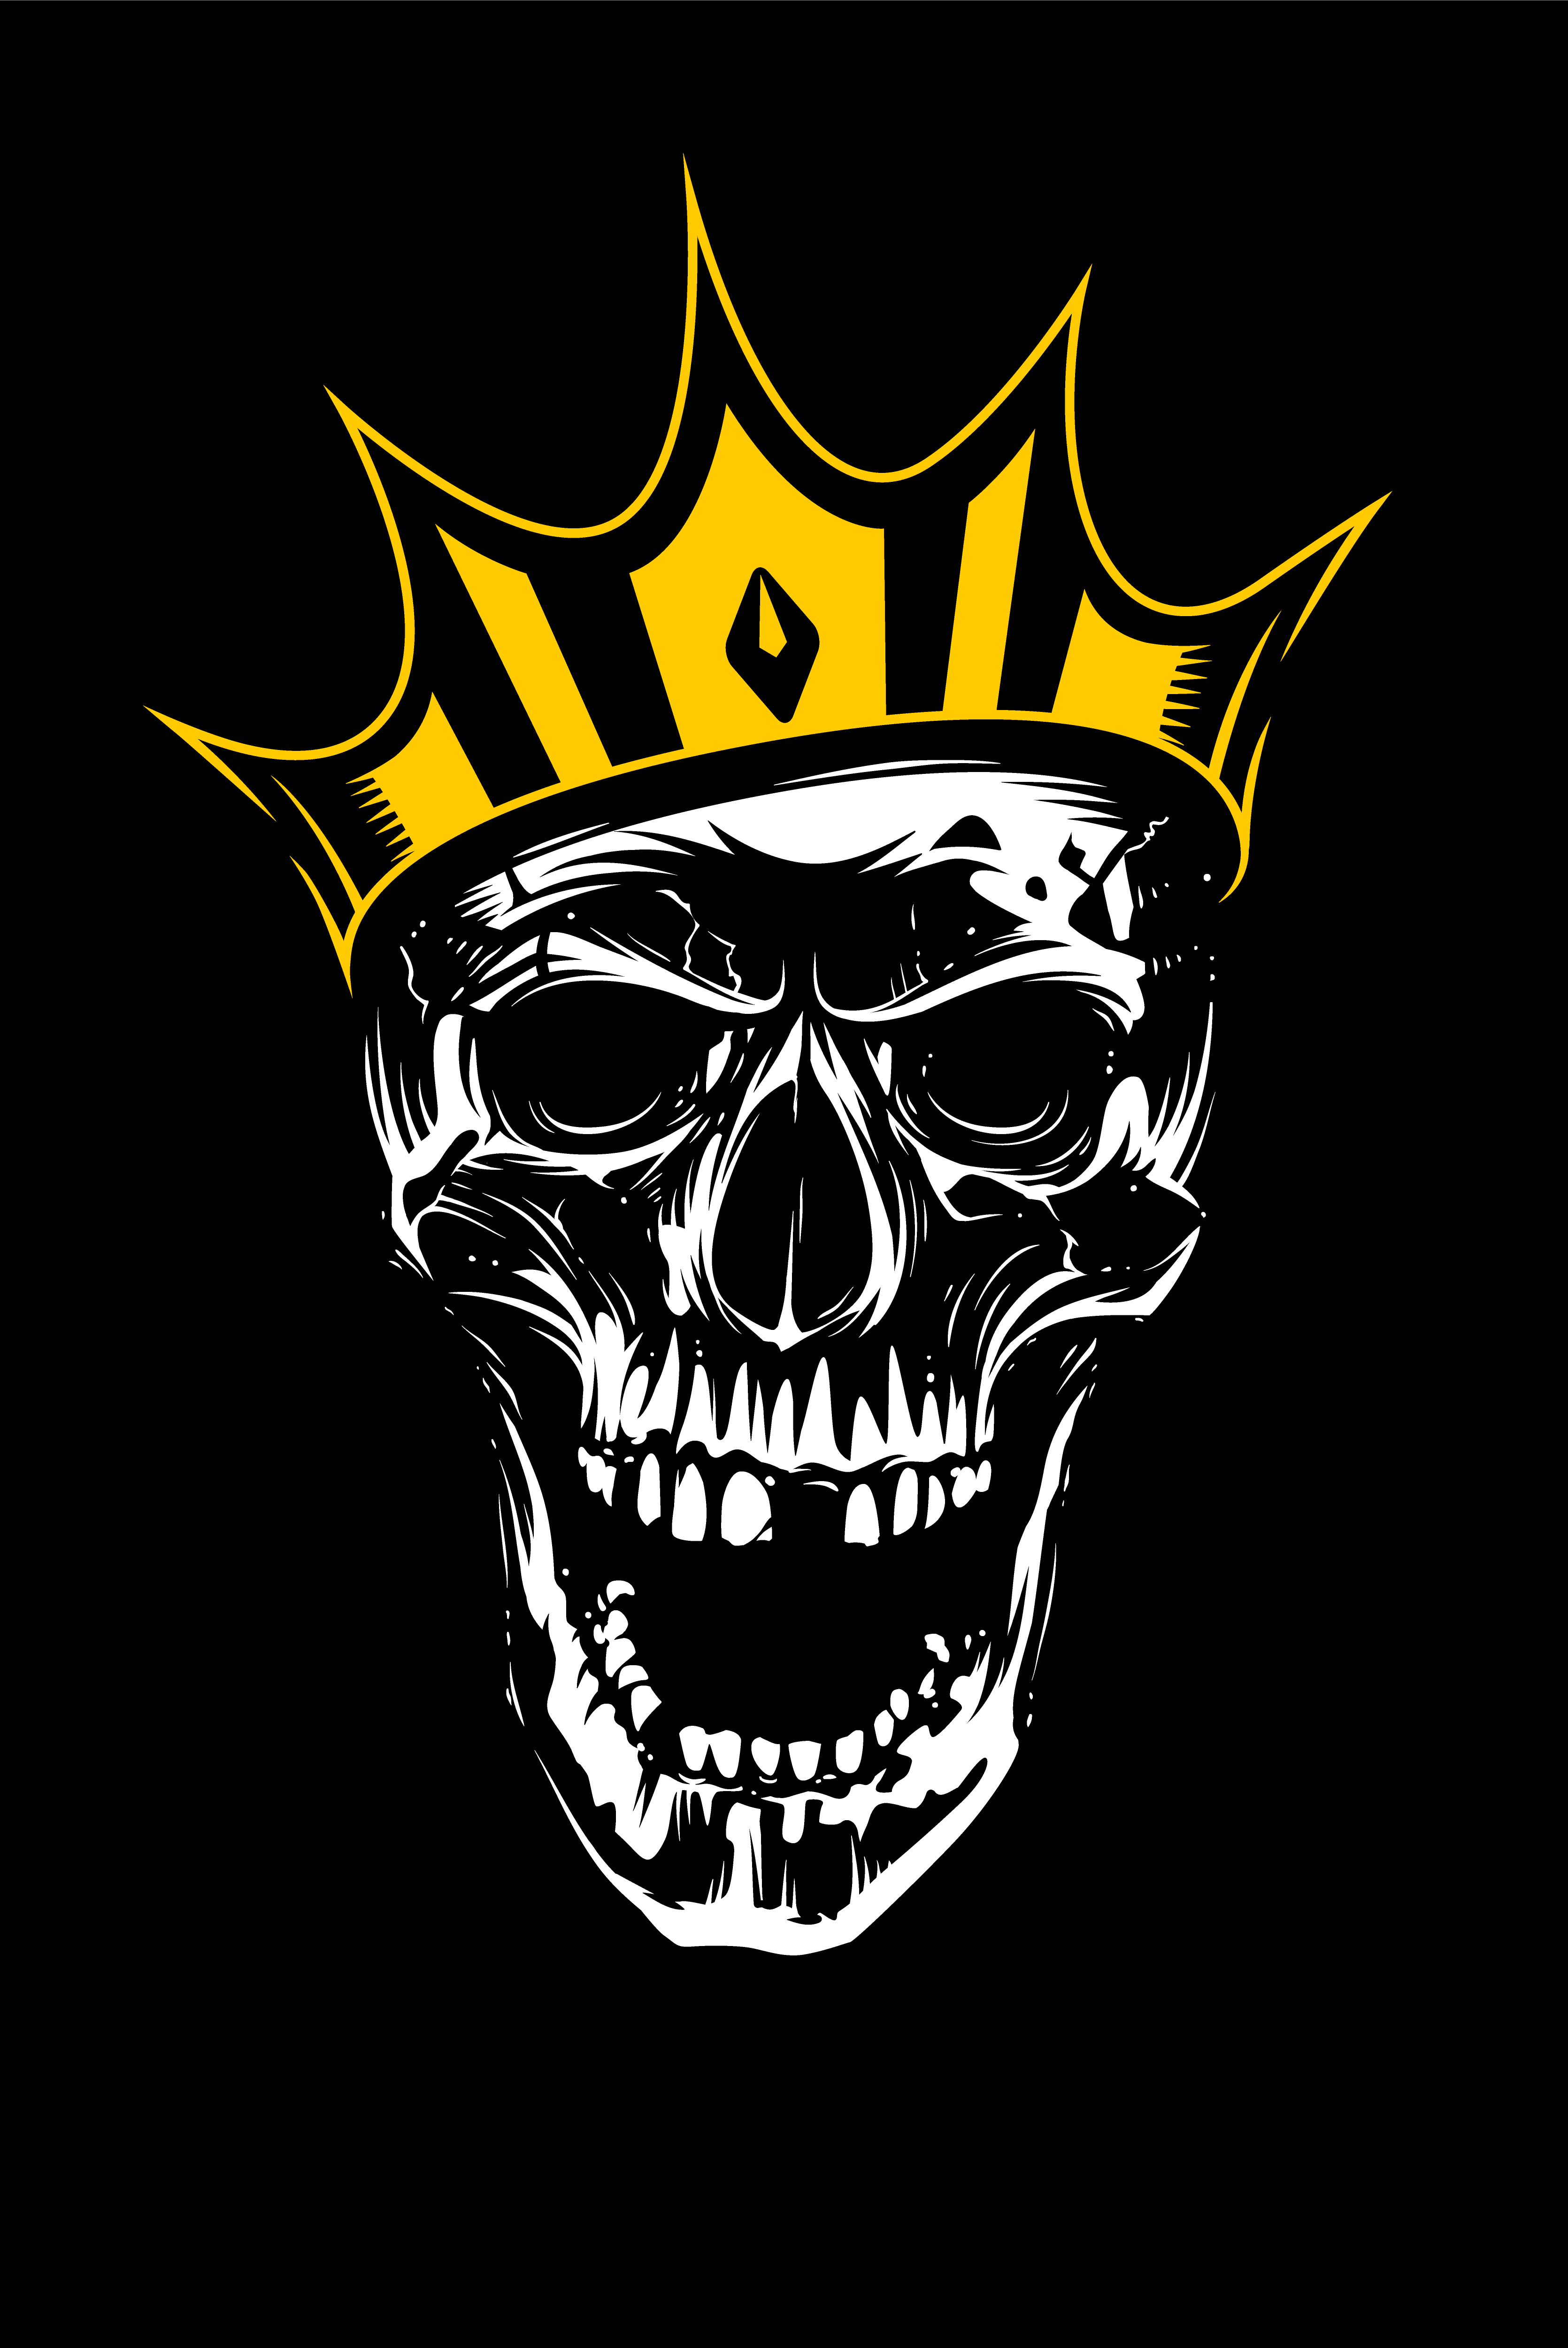 White Skull in Gold Crown on Black Background 376840 Vector Art at Vecteezy